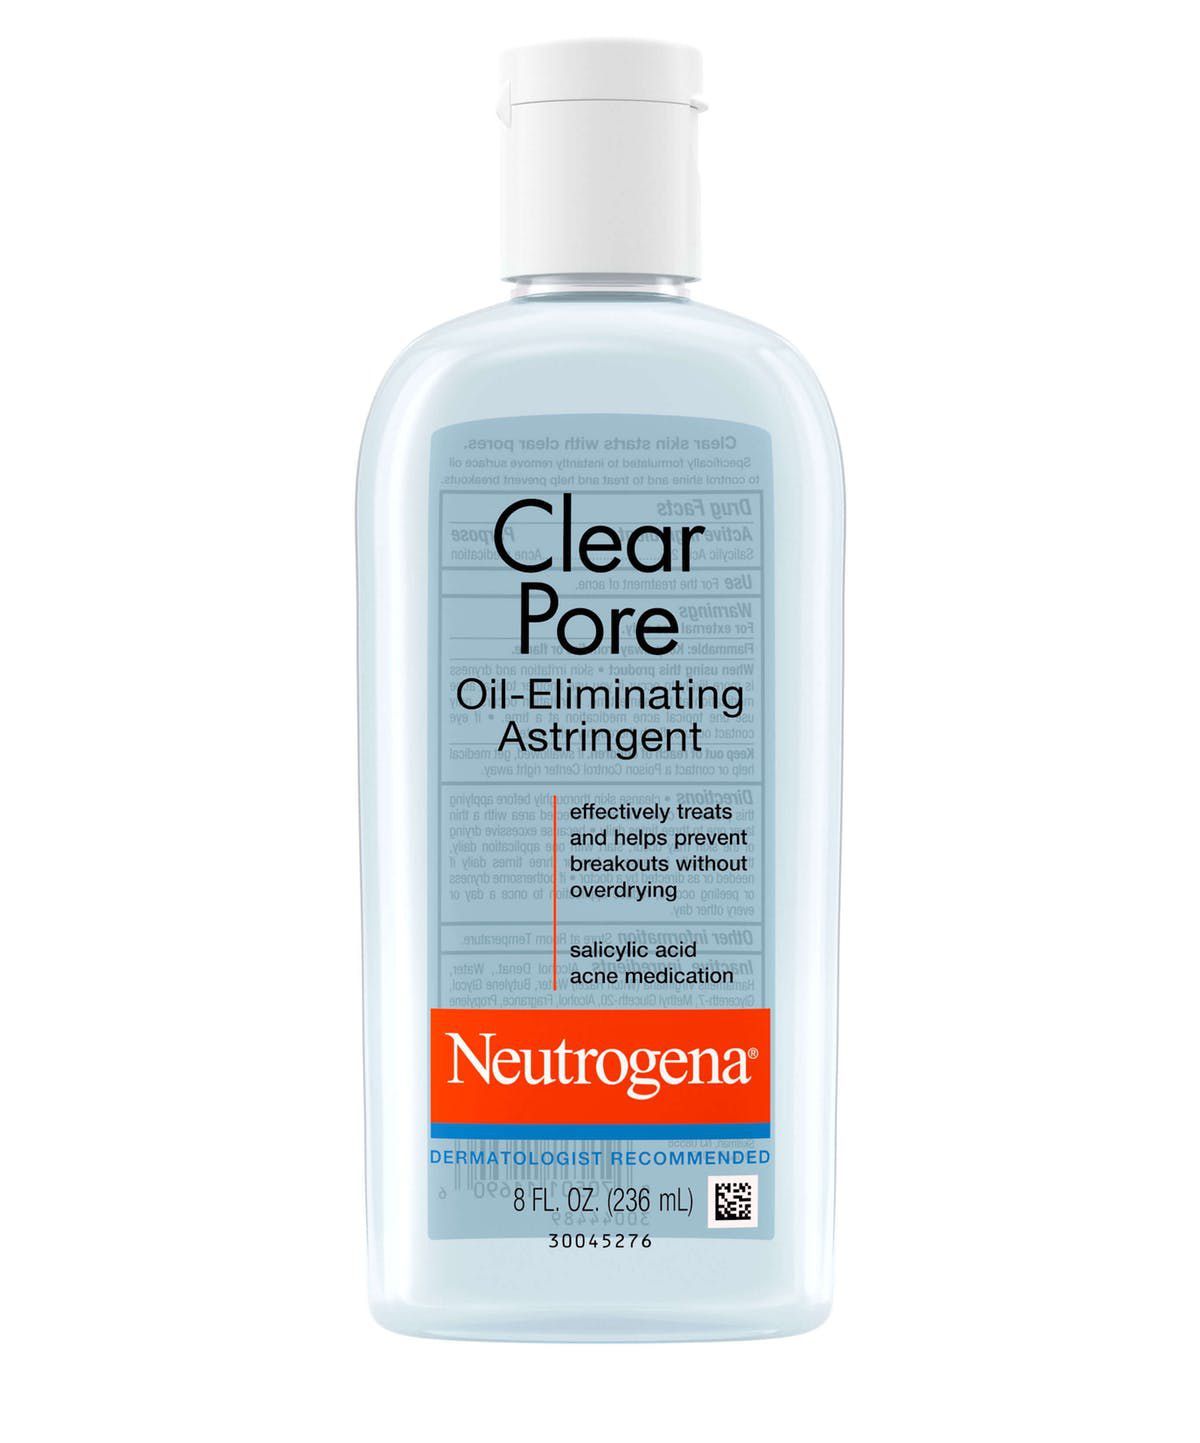 Neutrogena klares Porenöl beseitigt Adstringens